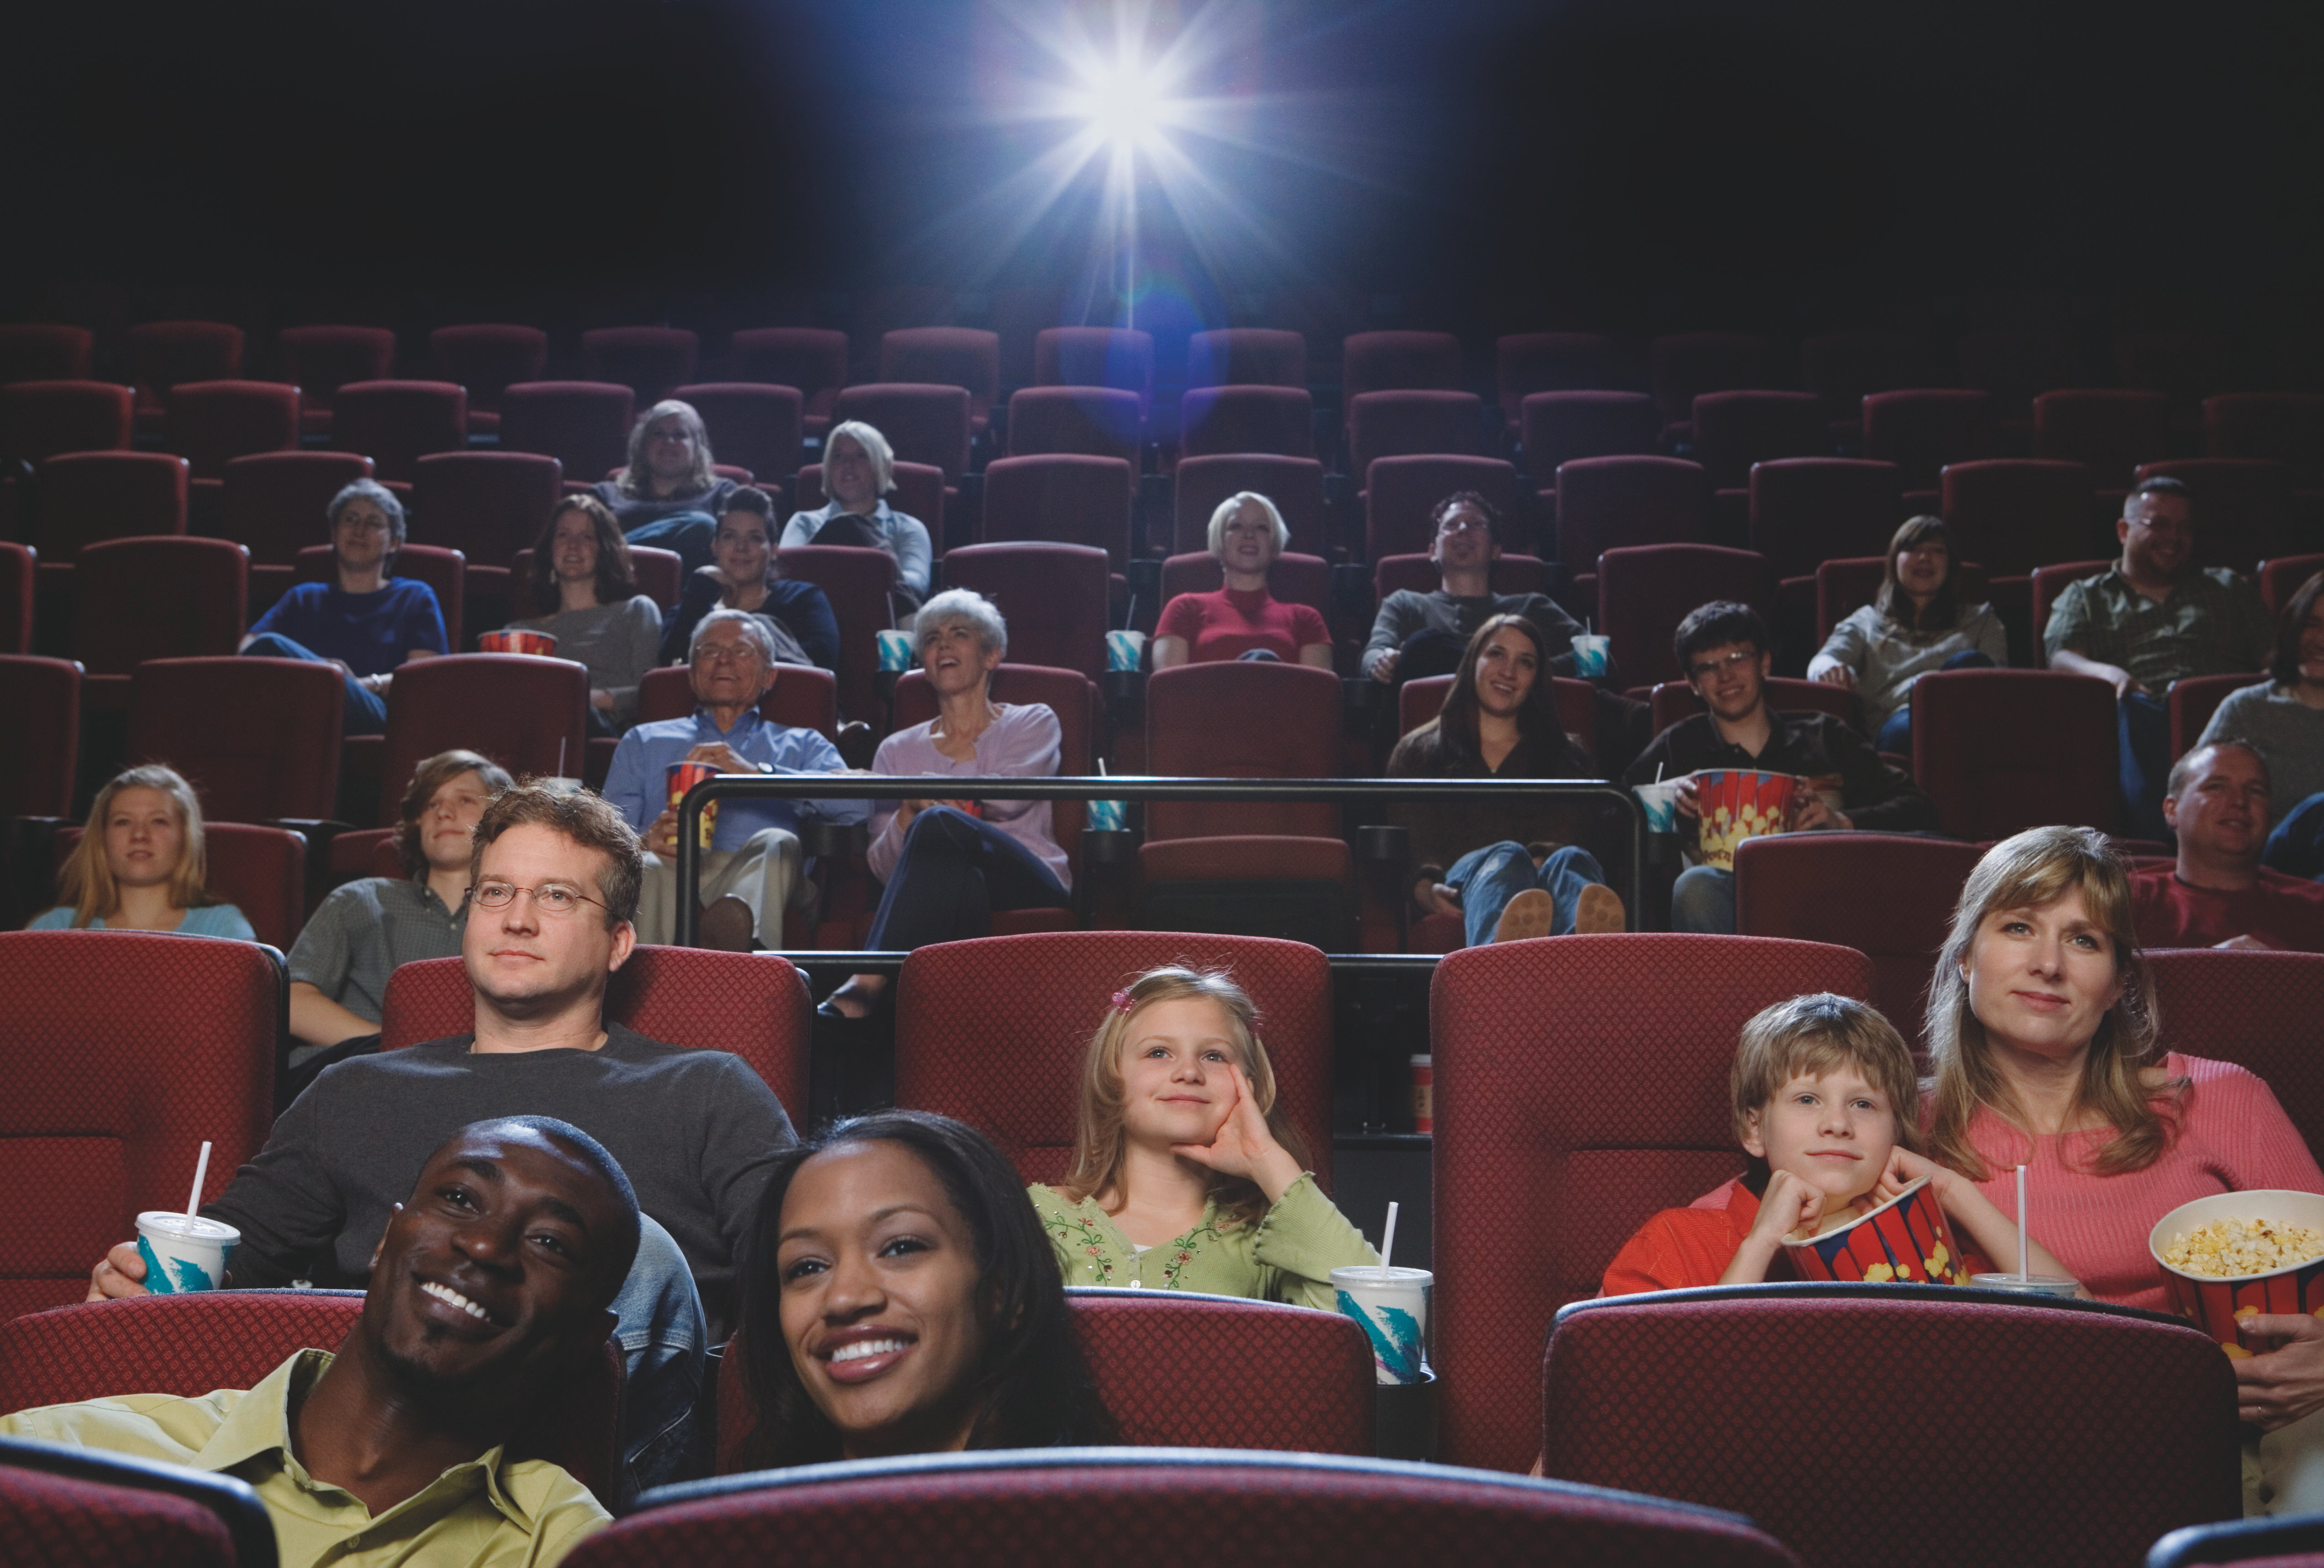 Theatre audience. Зал кинотеатра с людьми. Люди в кинотеатре. Зрители в кинотеатре. Зрительный зал кинотеатра.